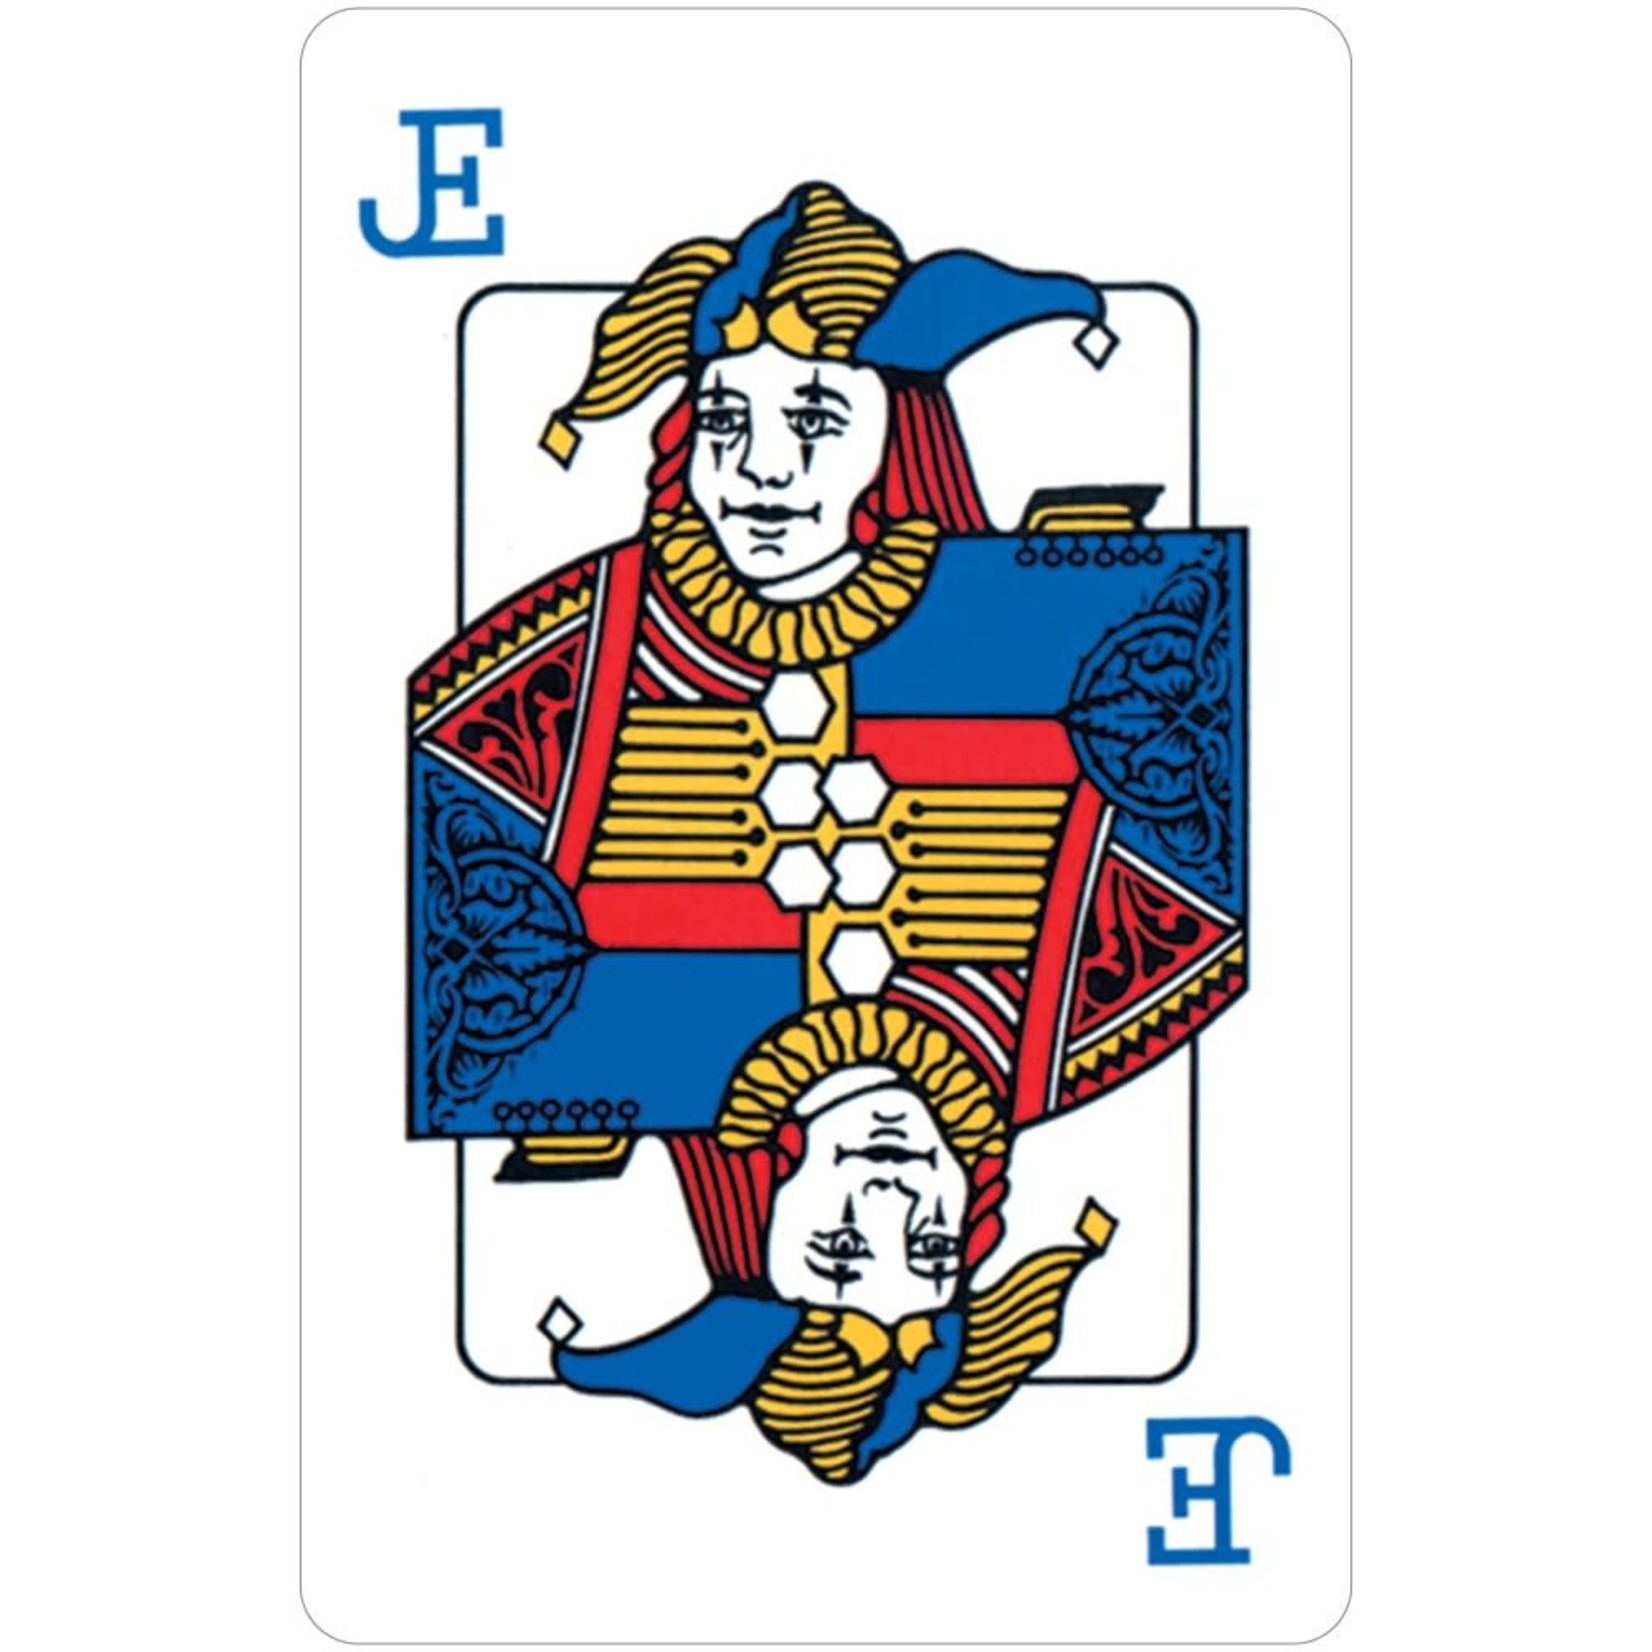 wizard card games online